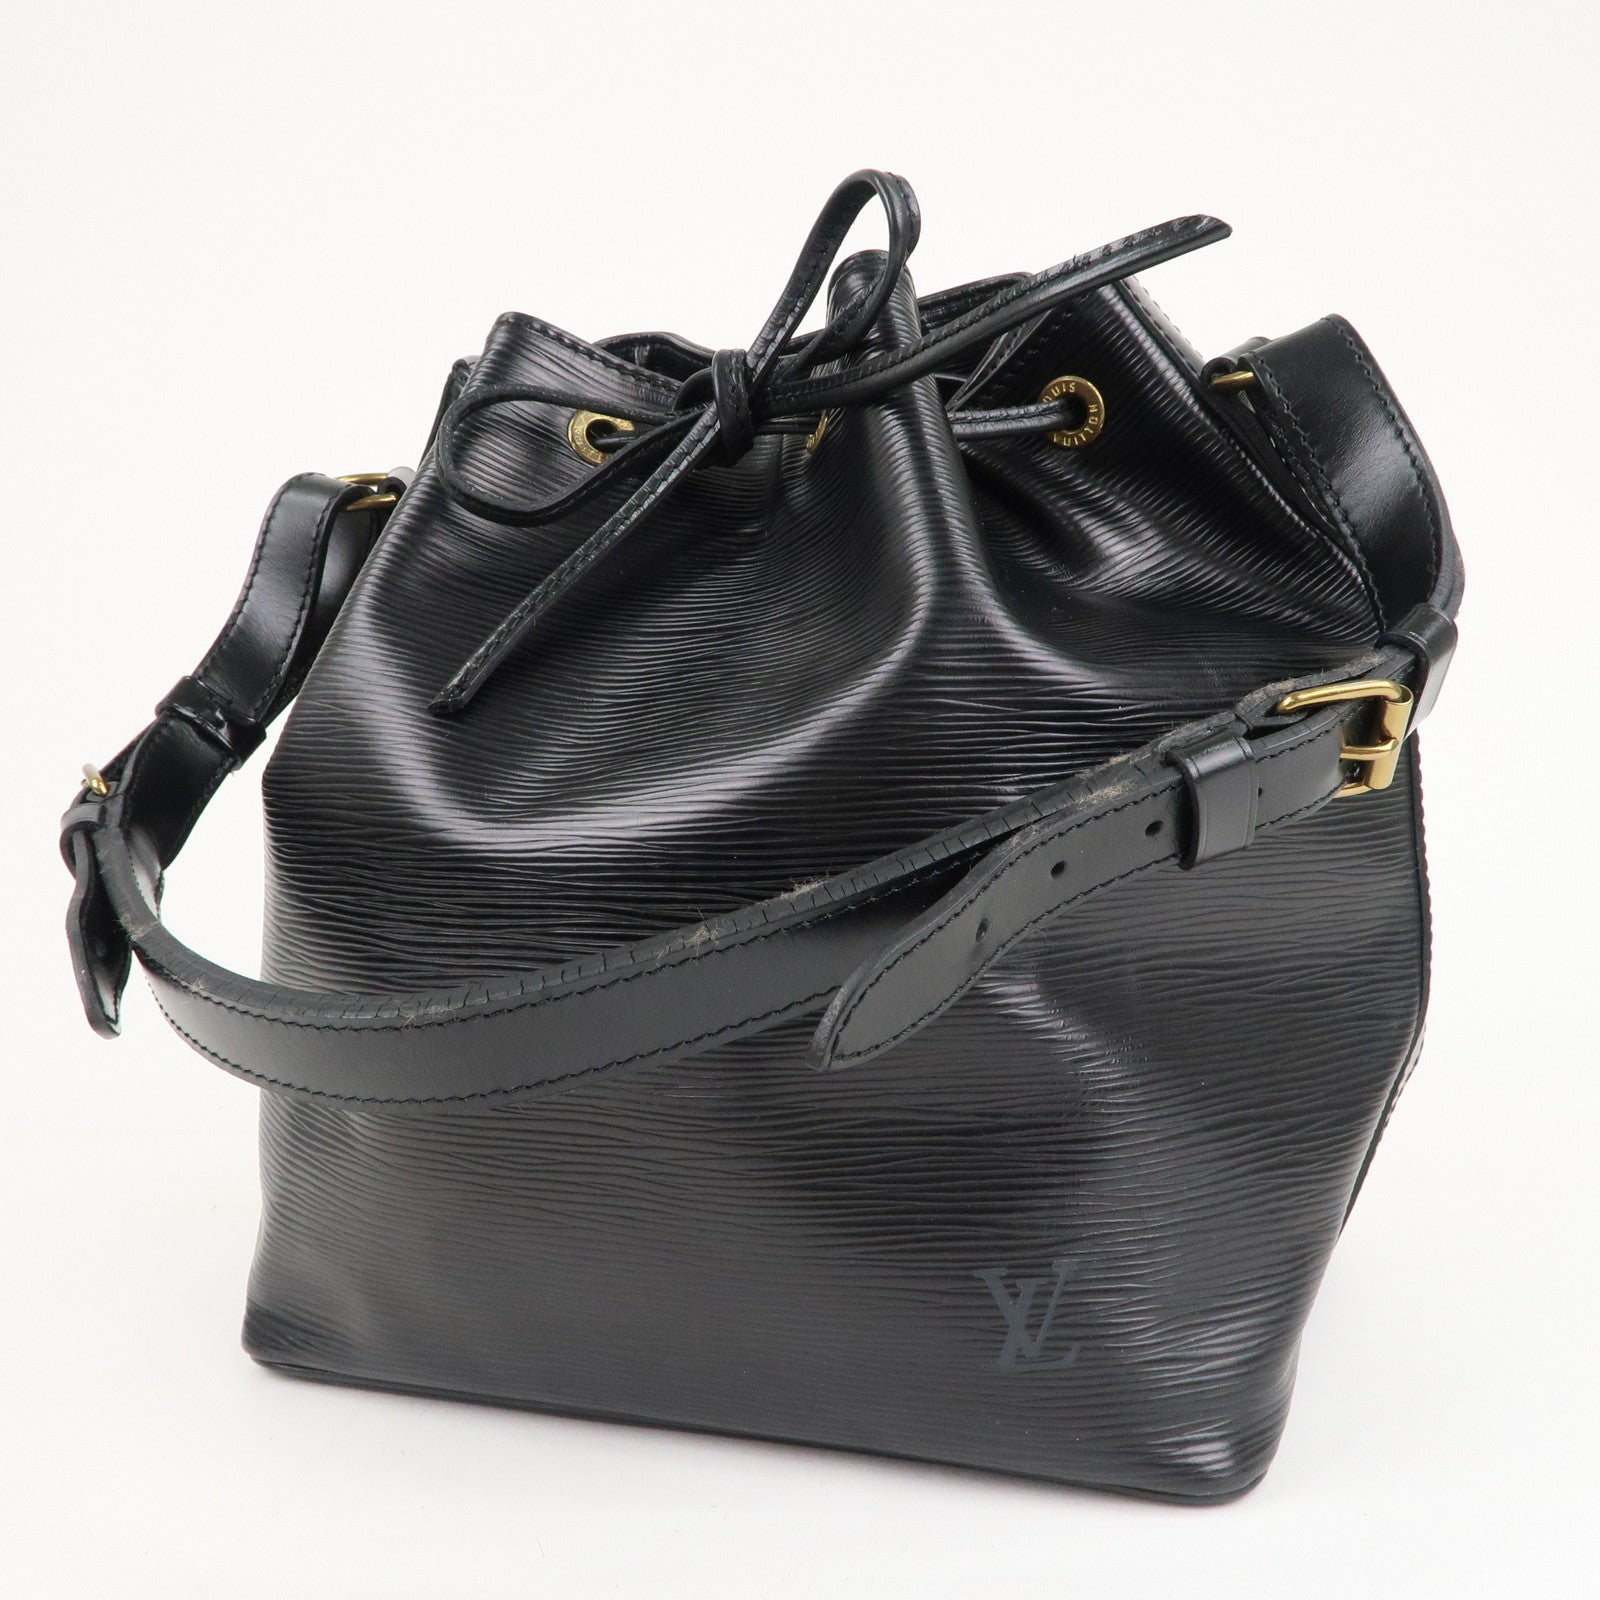 URGENT SALE!!! Authentic LV Petit Noe Epi Black, Luxury, Bags